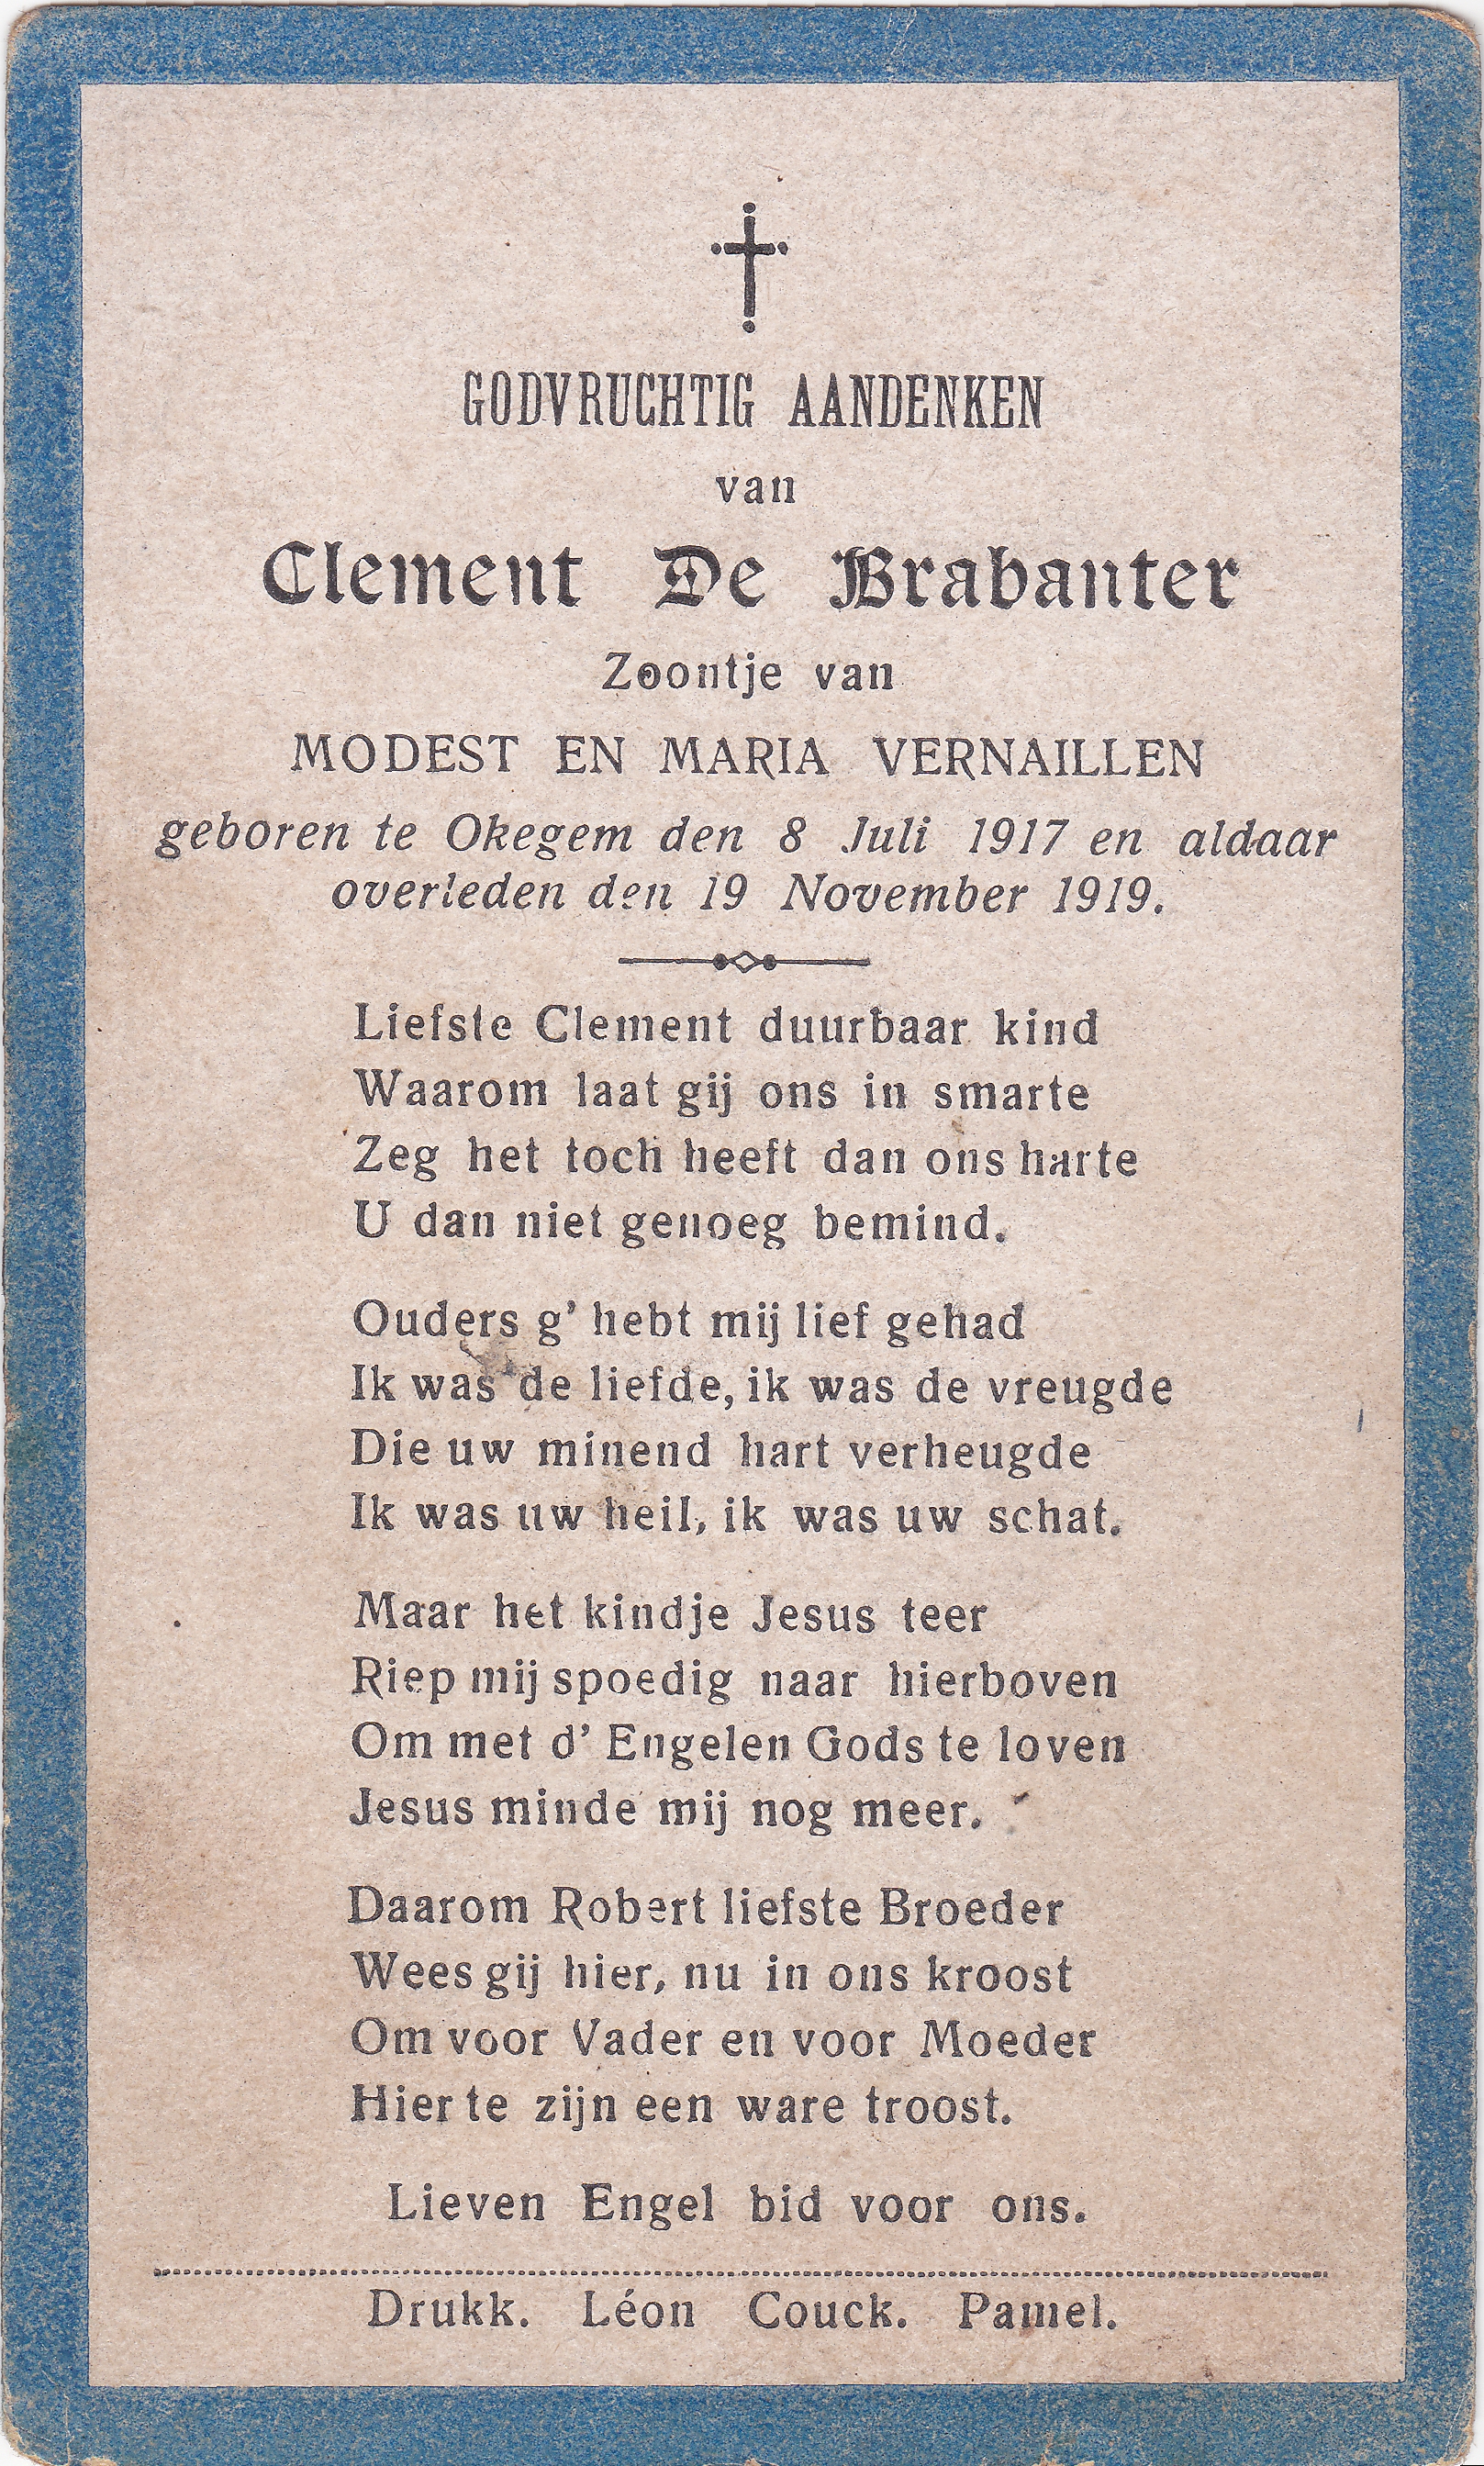 De Brabanter Clement